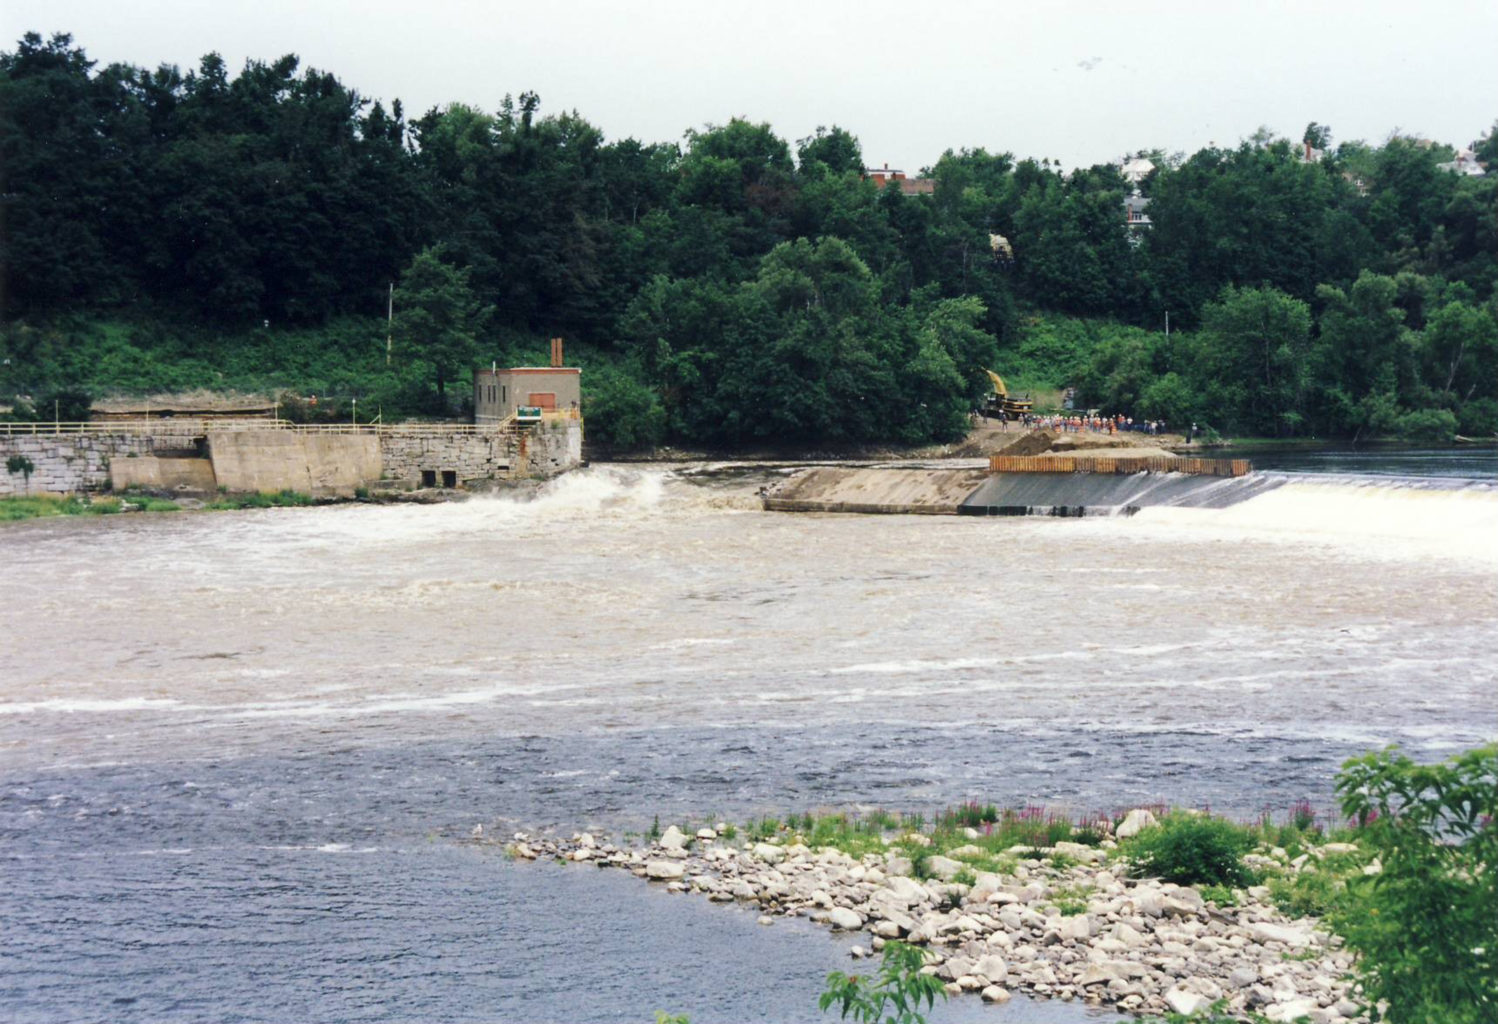 Edwards Dam removal